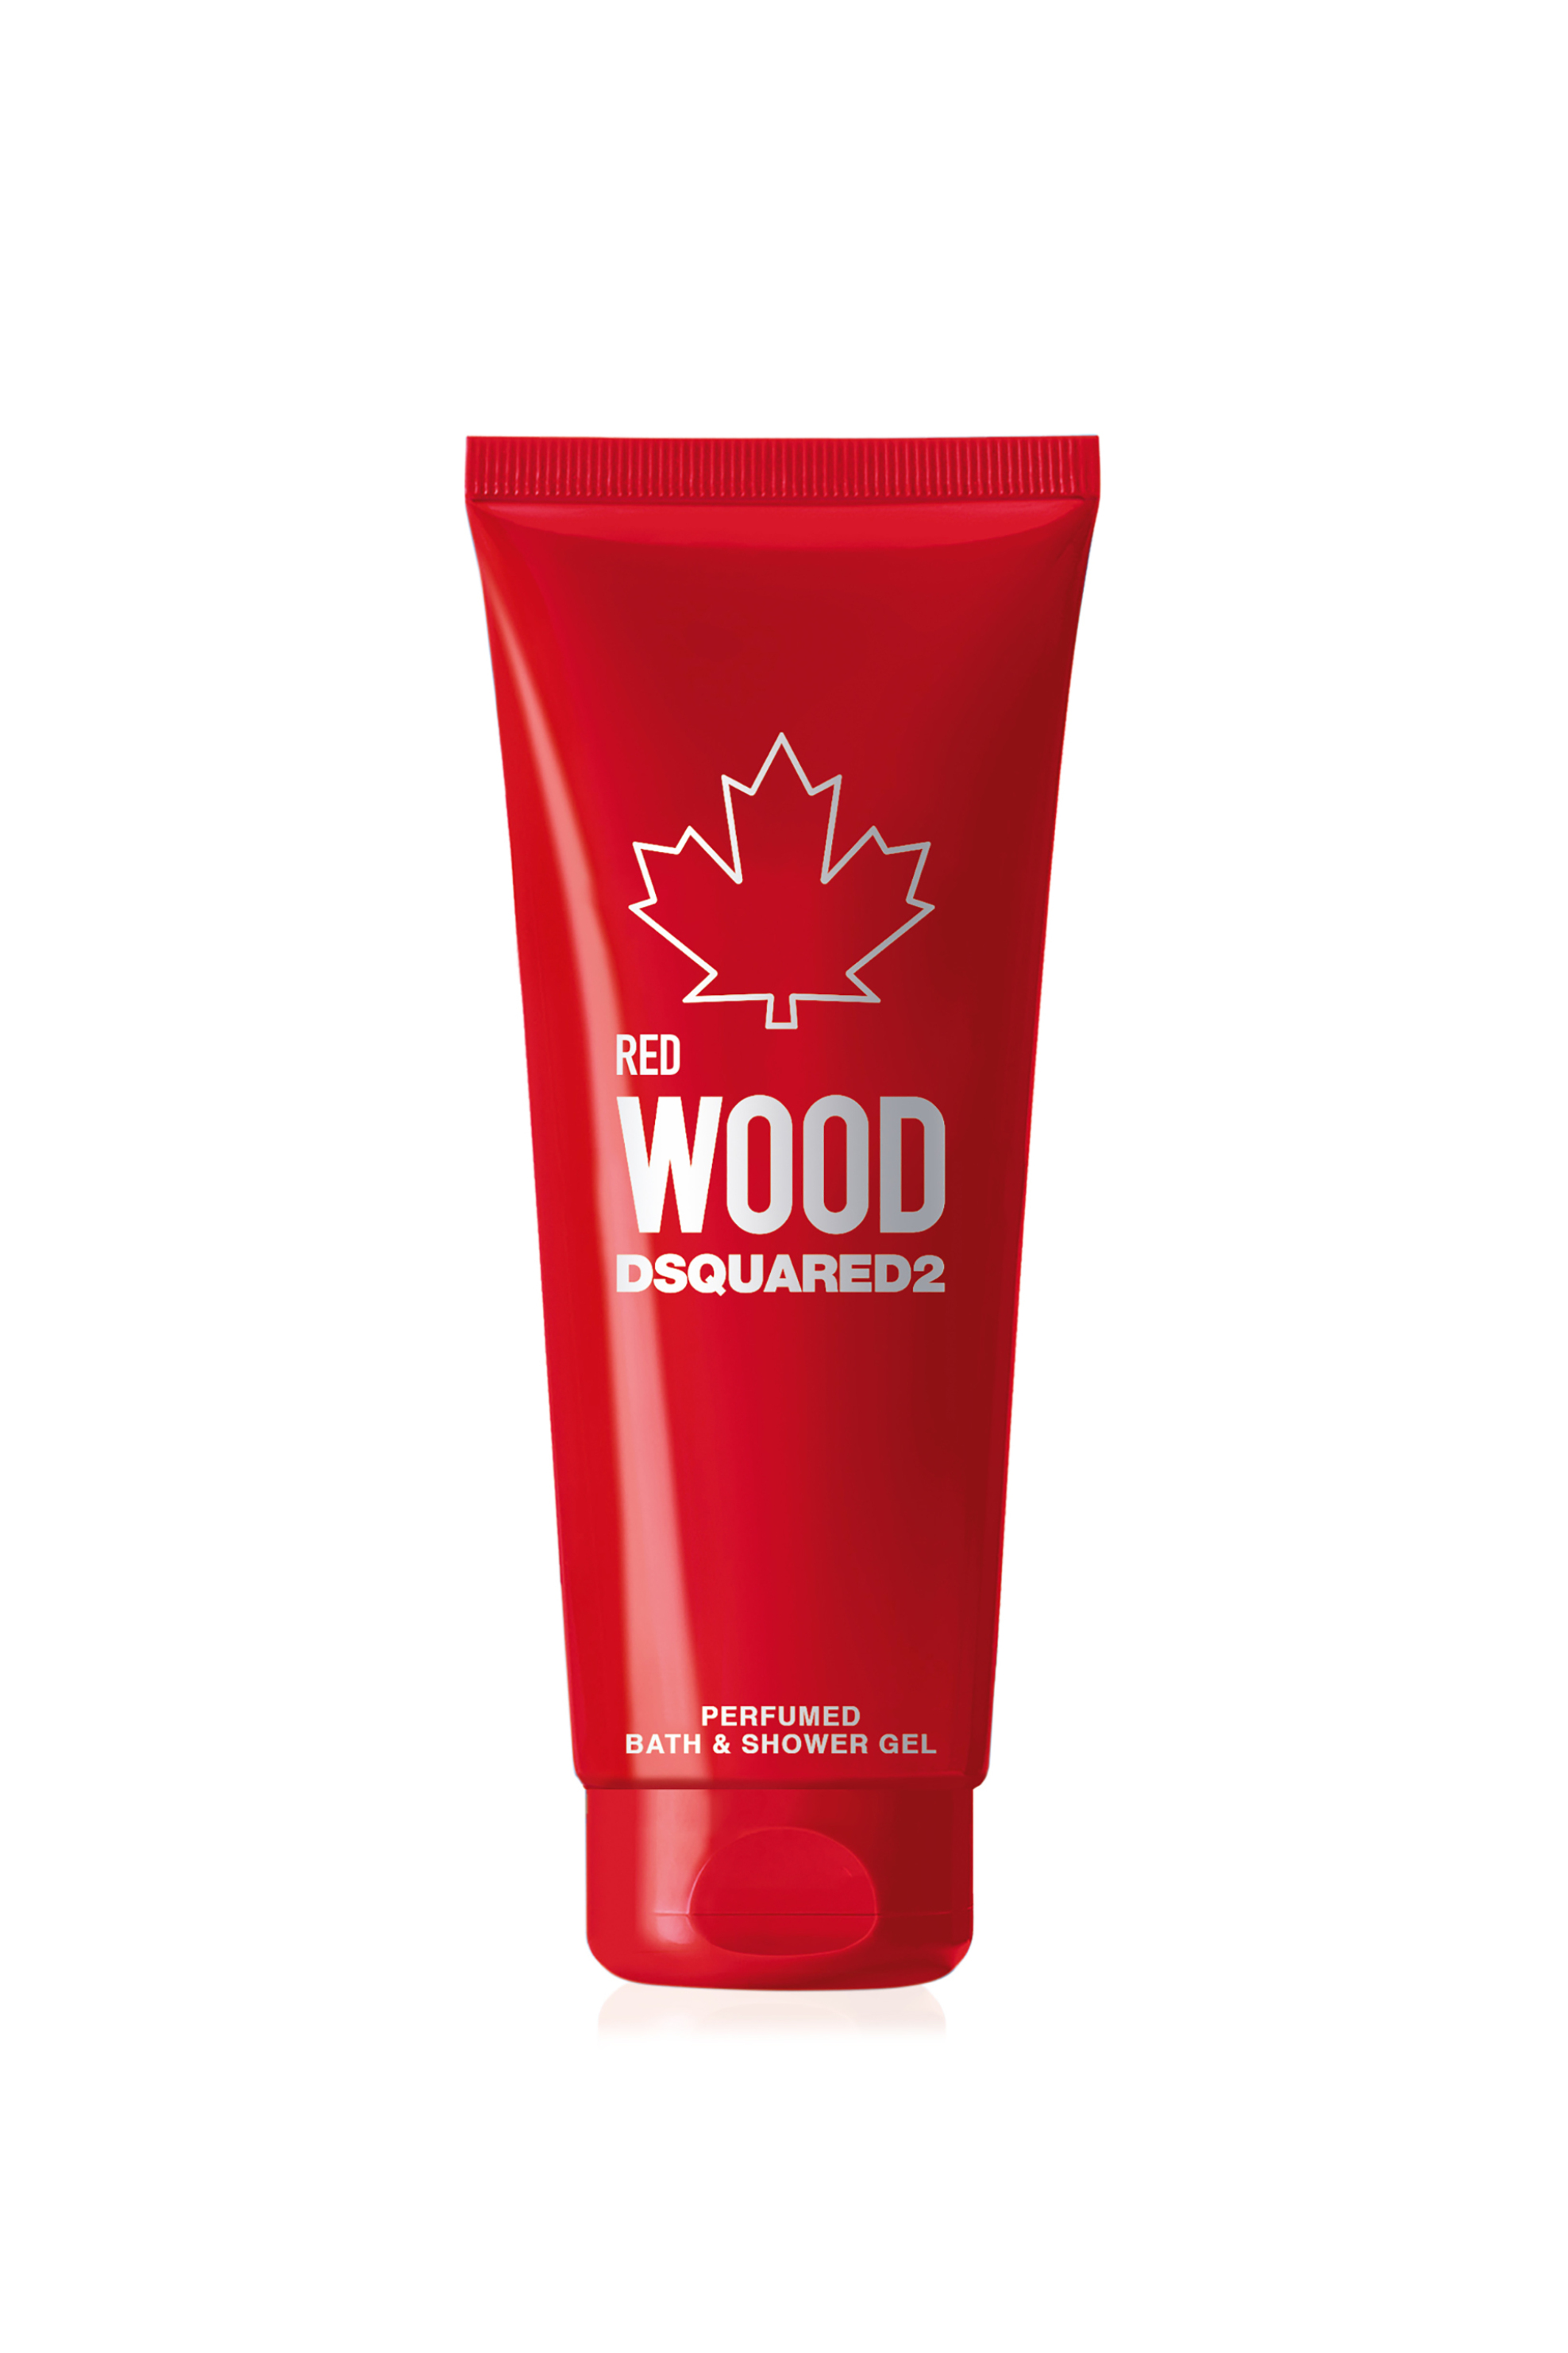 Dsquared2 Wood Red Pour Femme Perfumed Bath & Shower Gel Tube 200 ml - 5C48 1054870